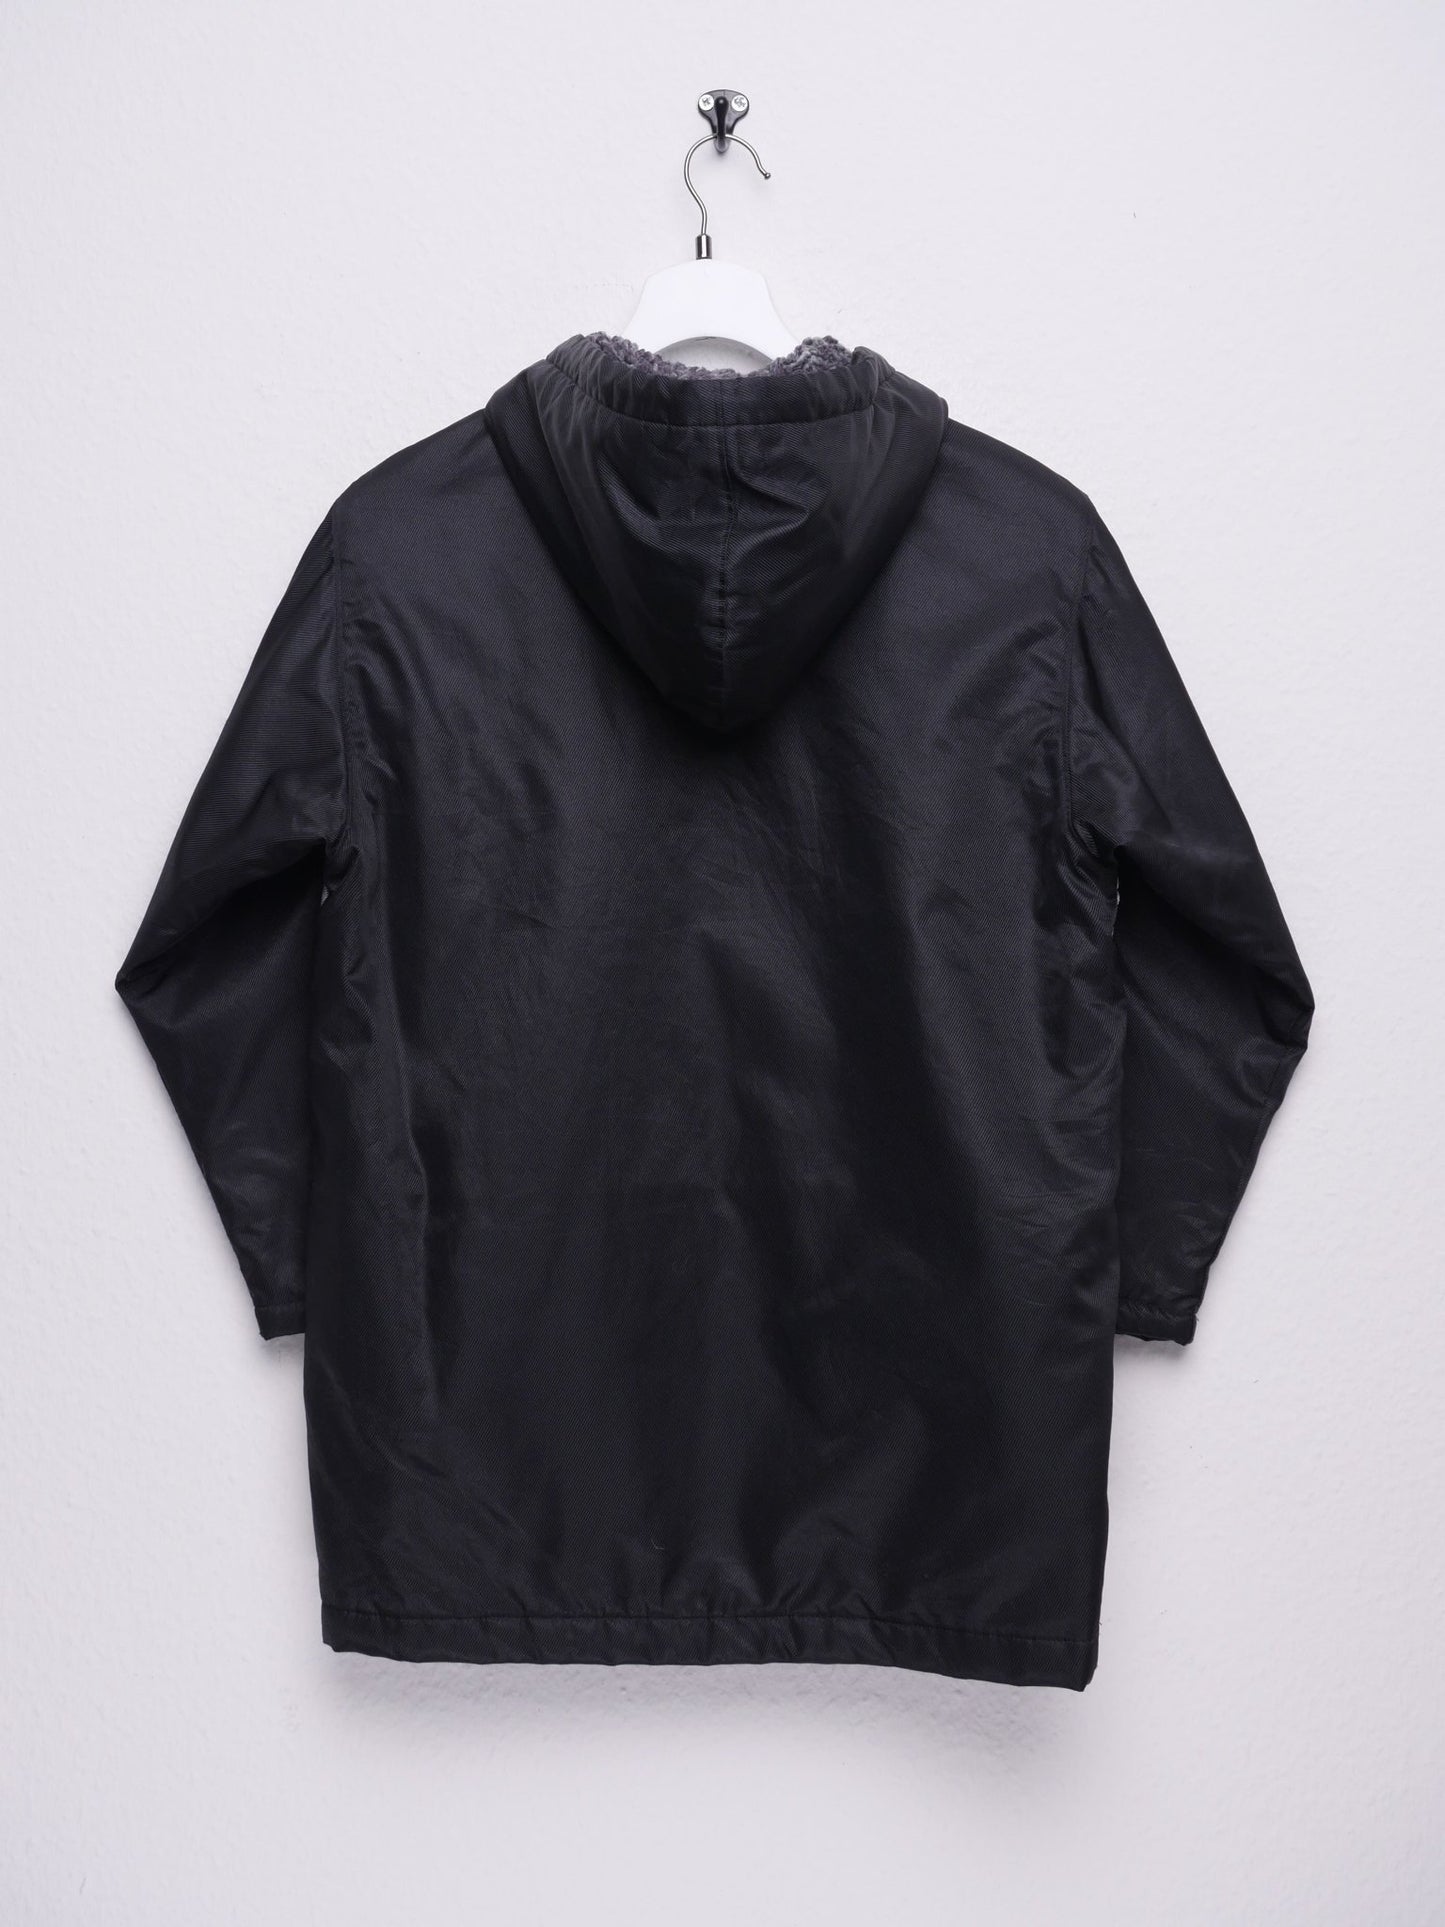 Adidas embroidered Logo black Heavy Jacket - Peeces